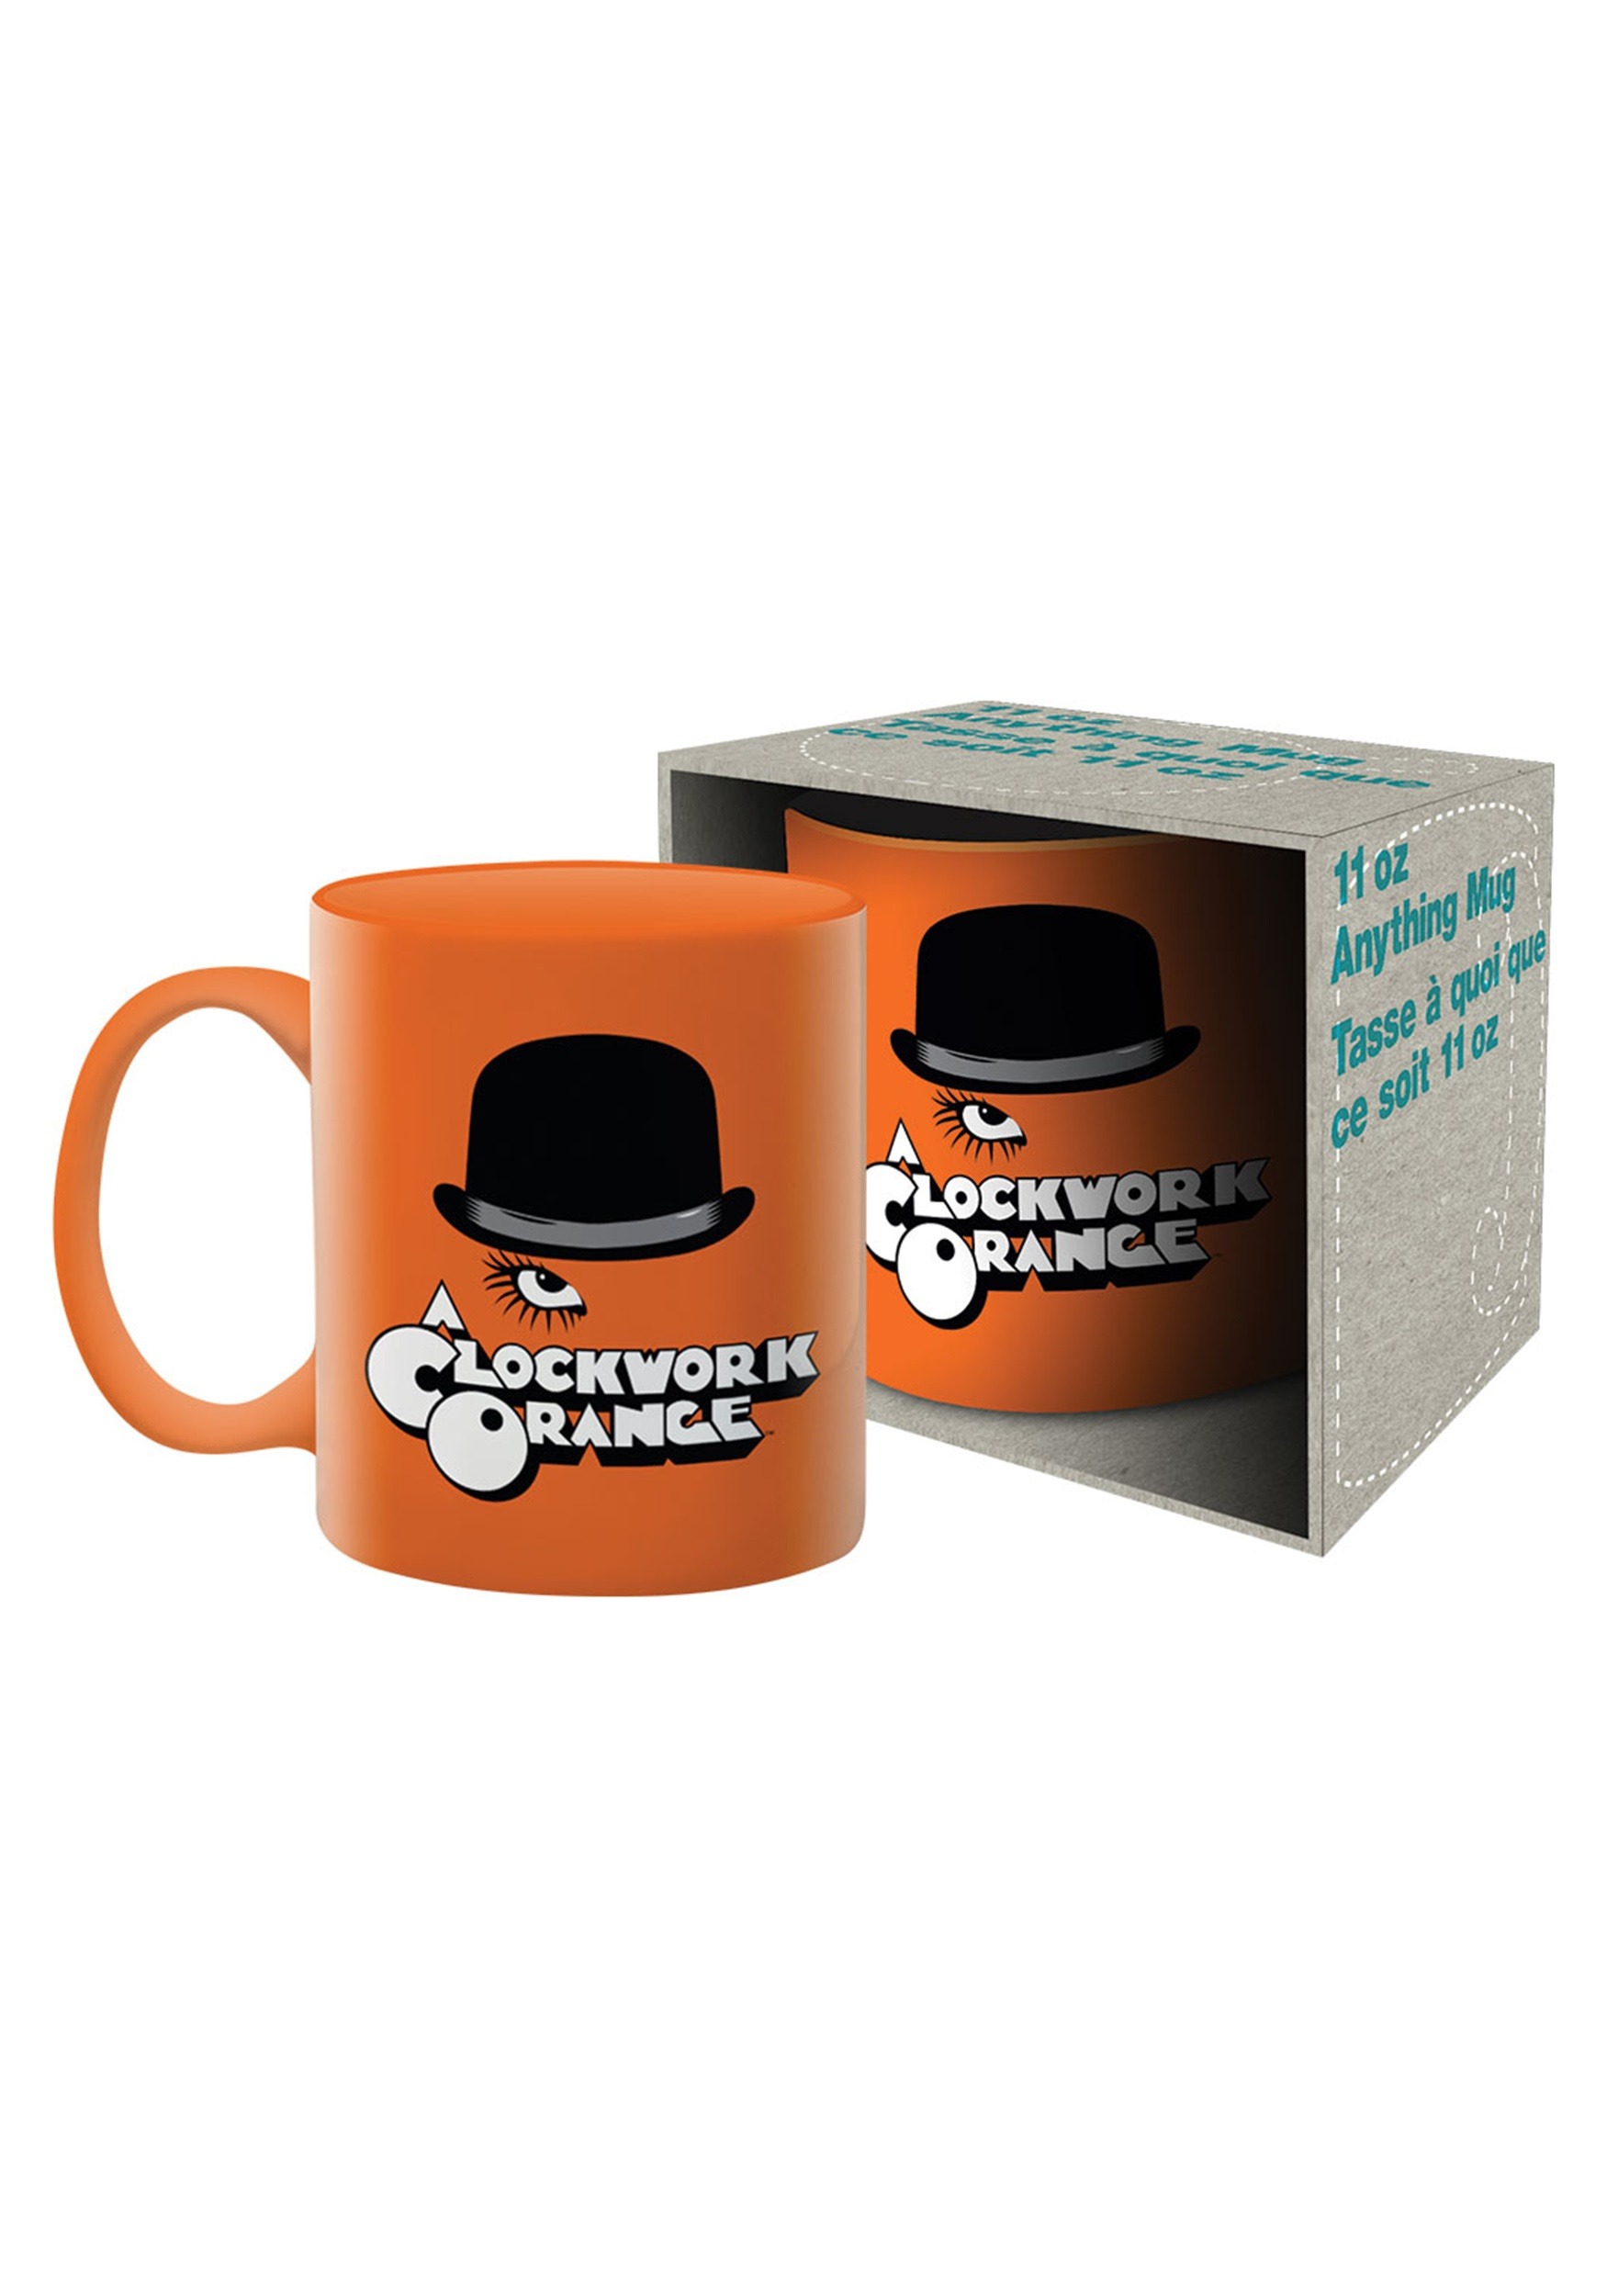 A Clockwork Orange 11oz Coffee Cup